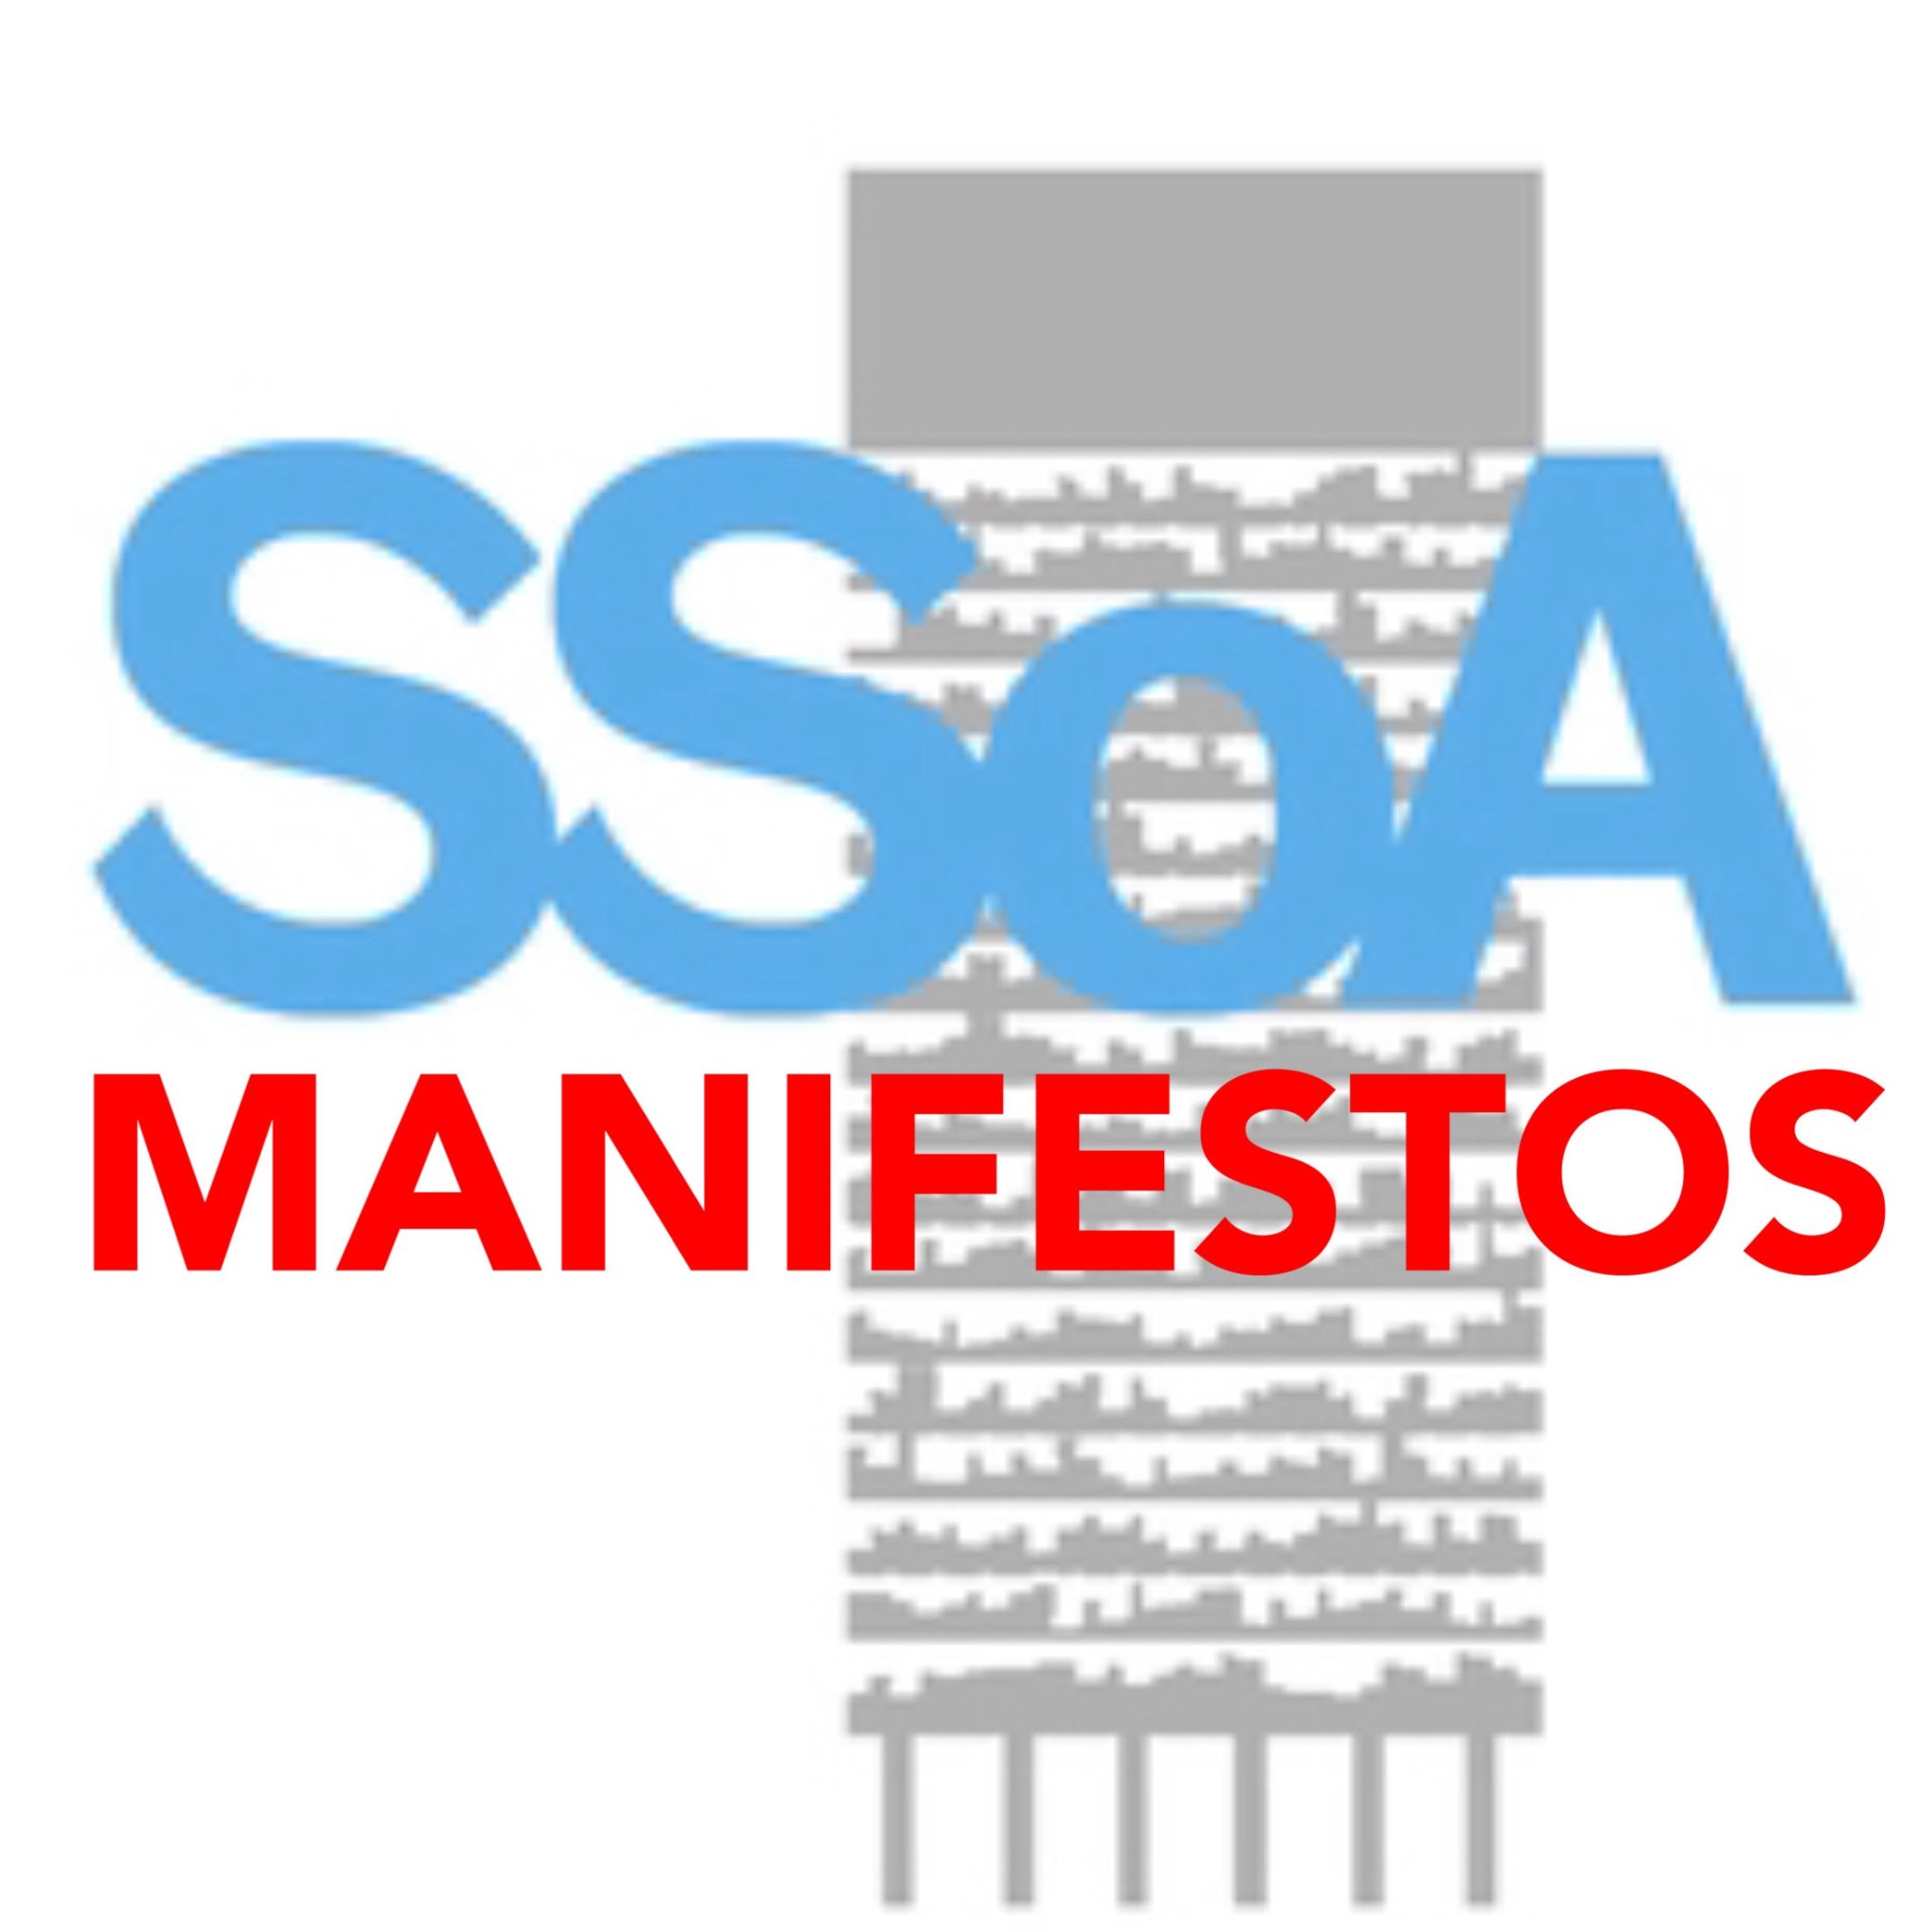 The 2019 Manifesto/s PhD Conference 
University of Sheffield 
School of Architecture (SSoA).